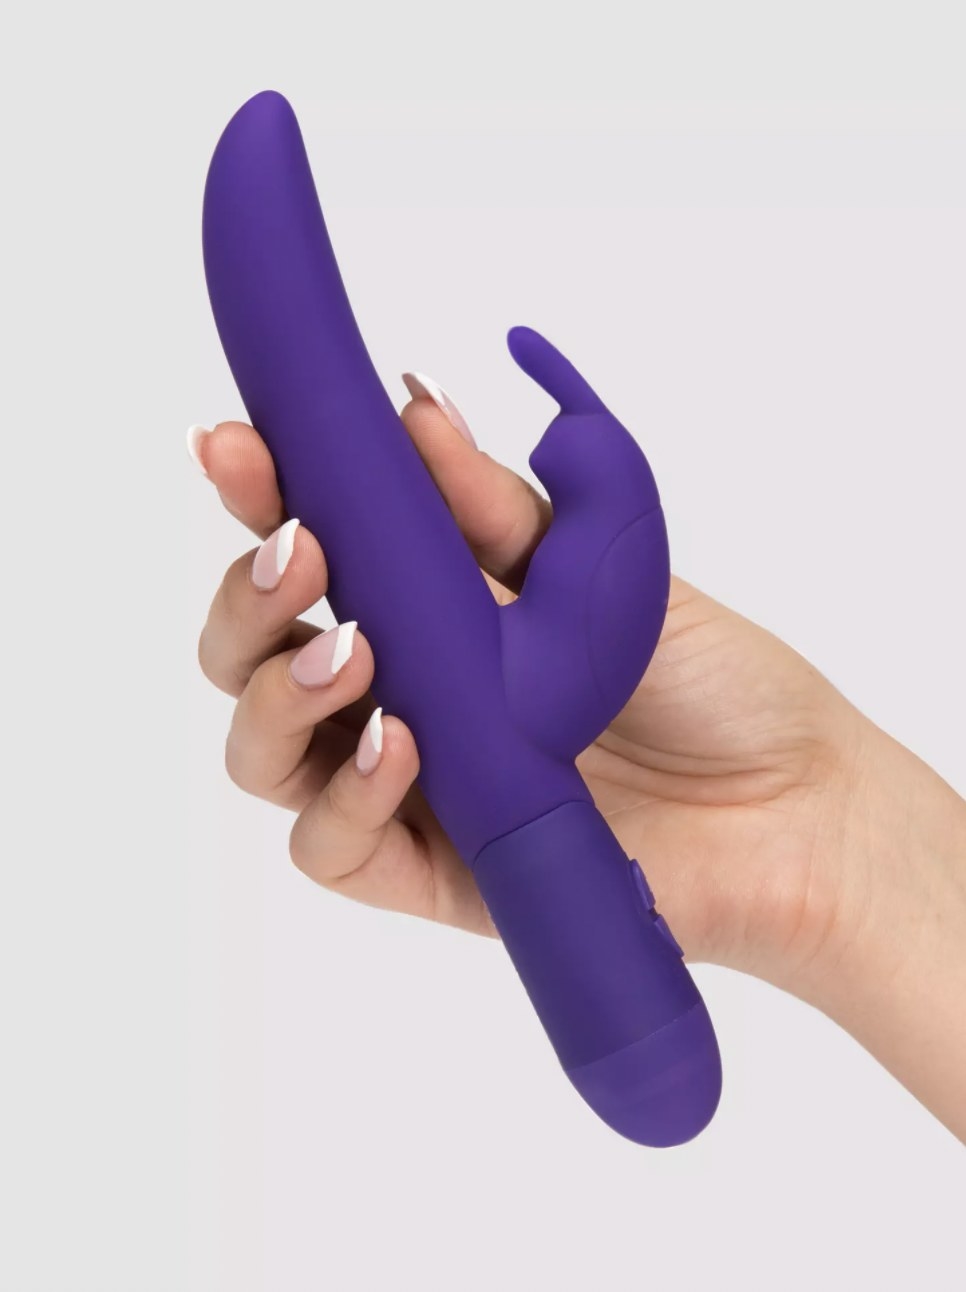 The purple rabbit vibe held in someone&#x27;s hand